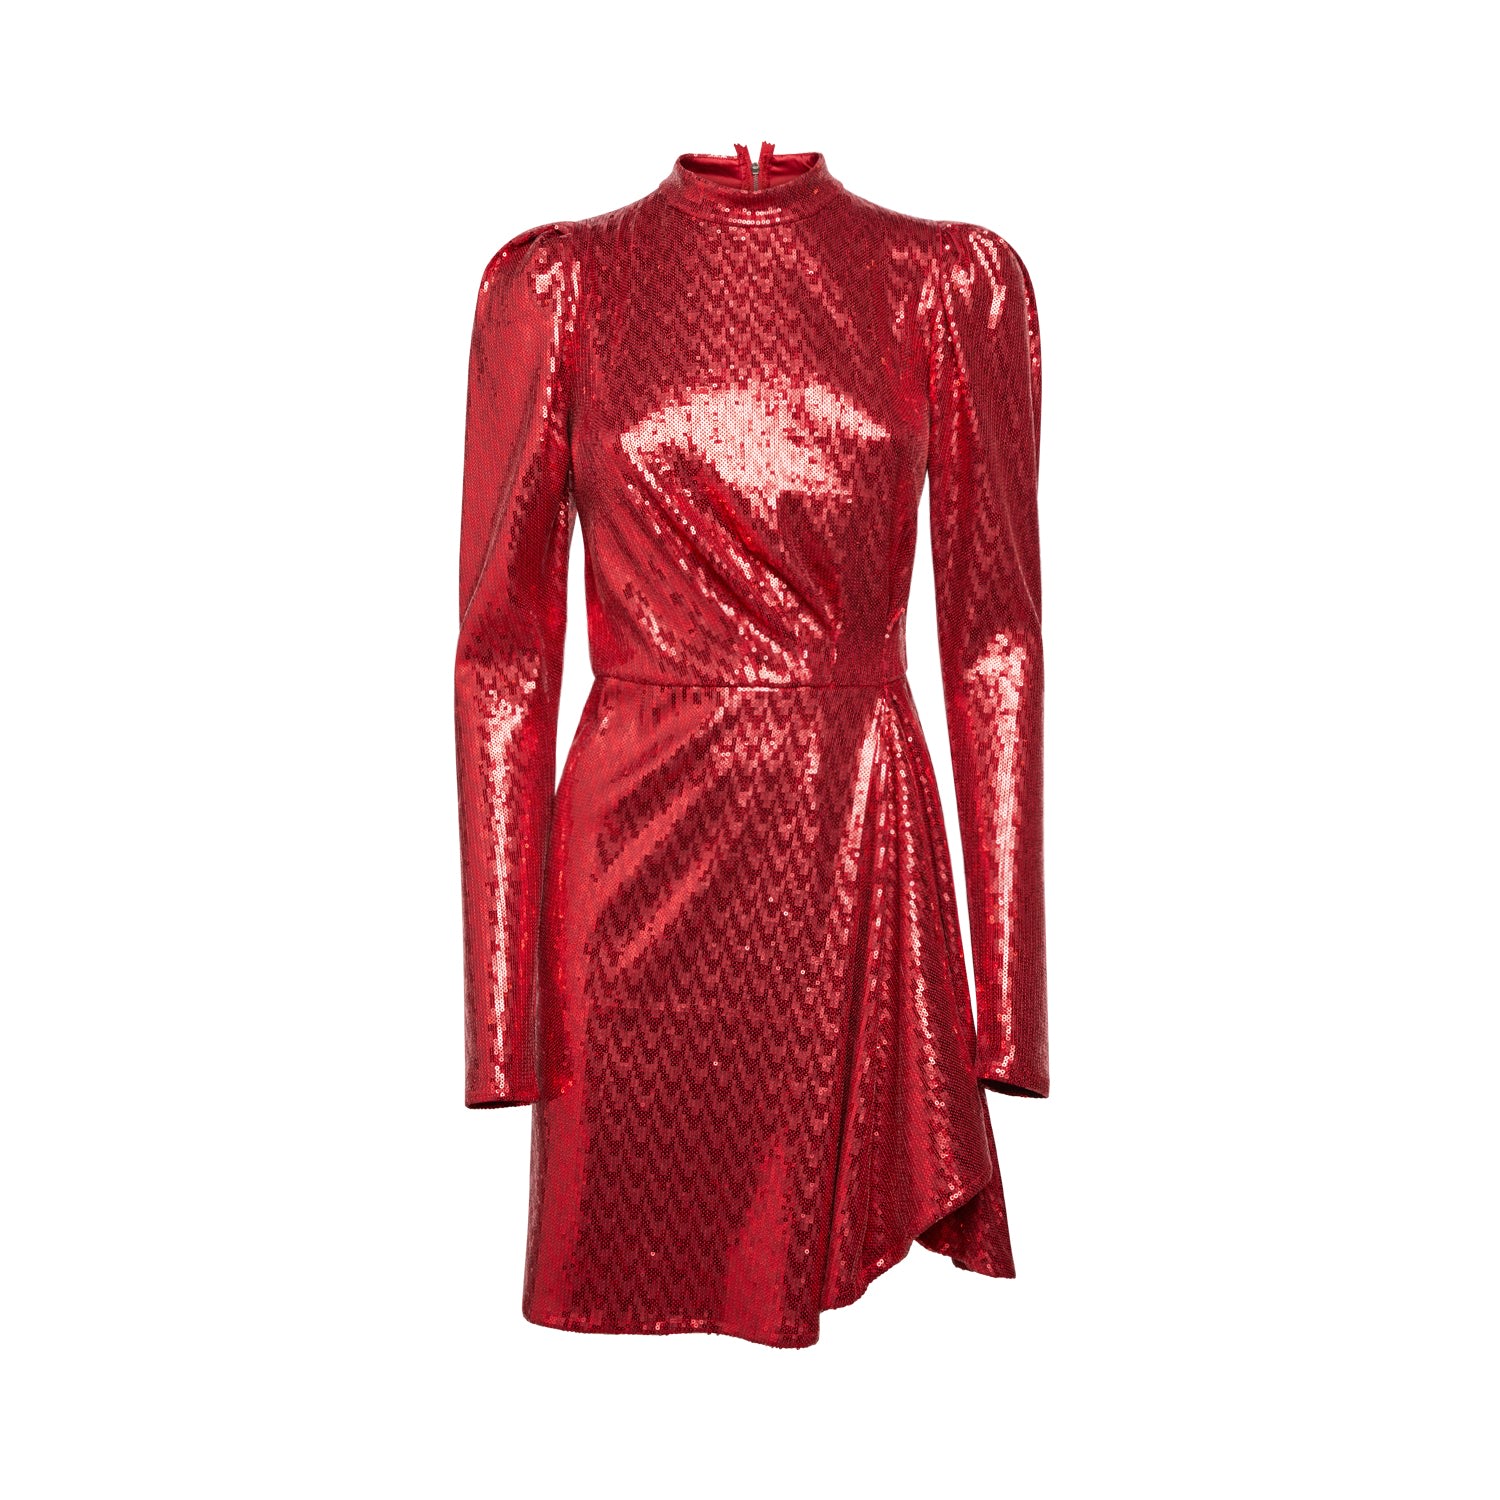 Women’s London Red Sequin Dress Small Sveta Milano